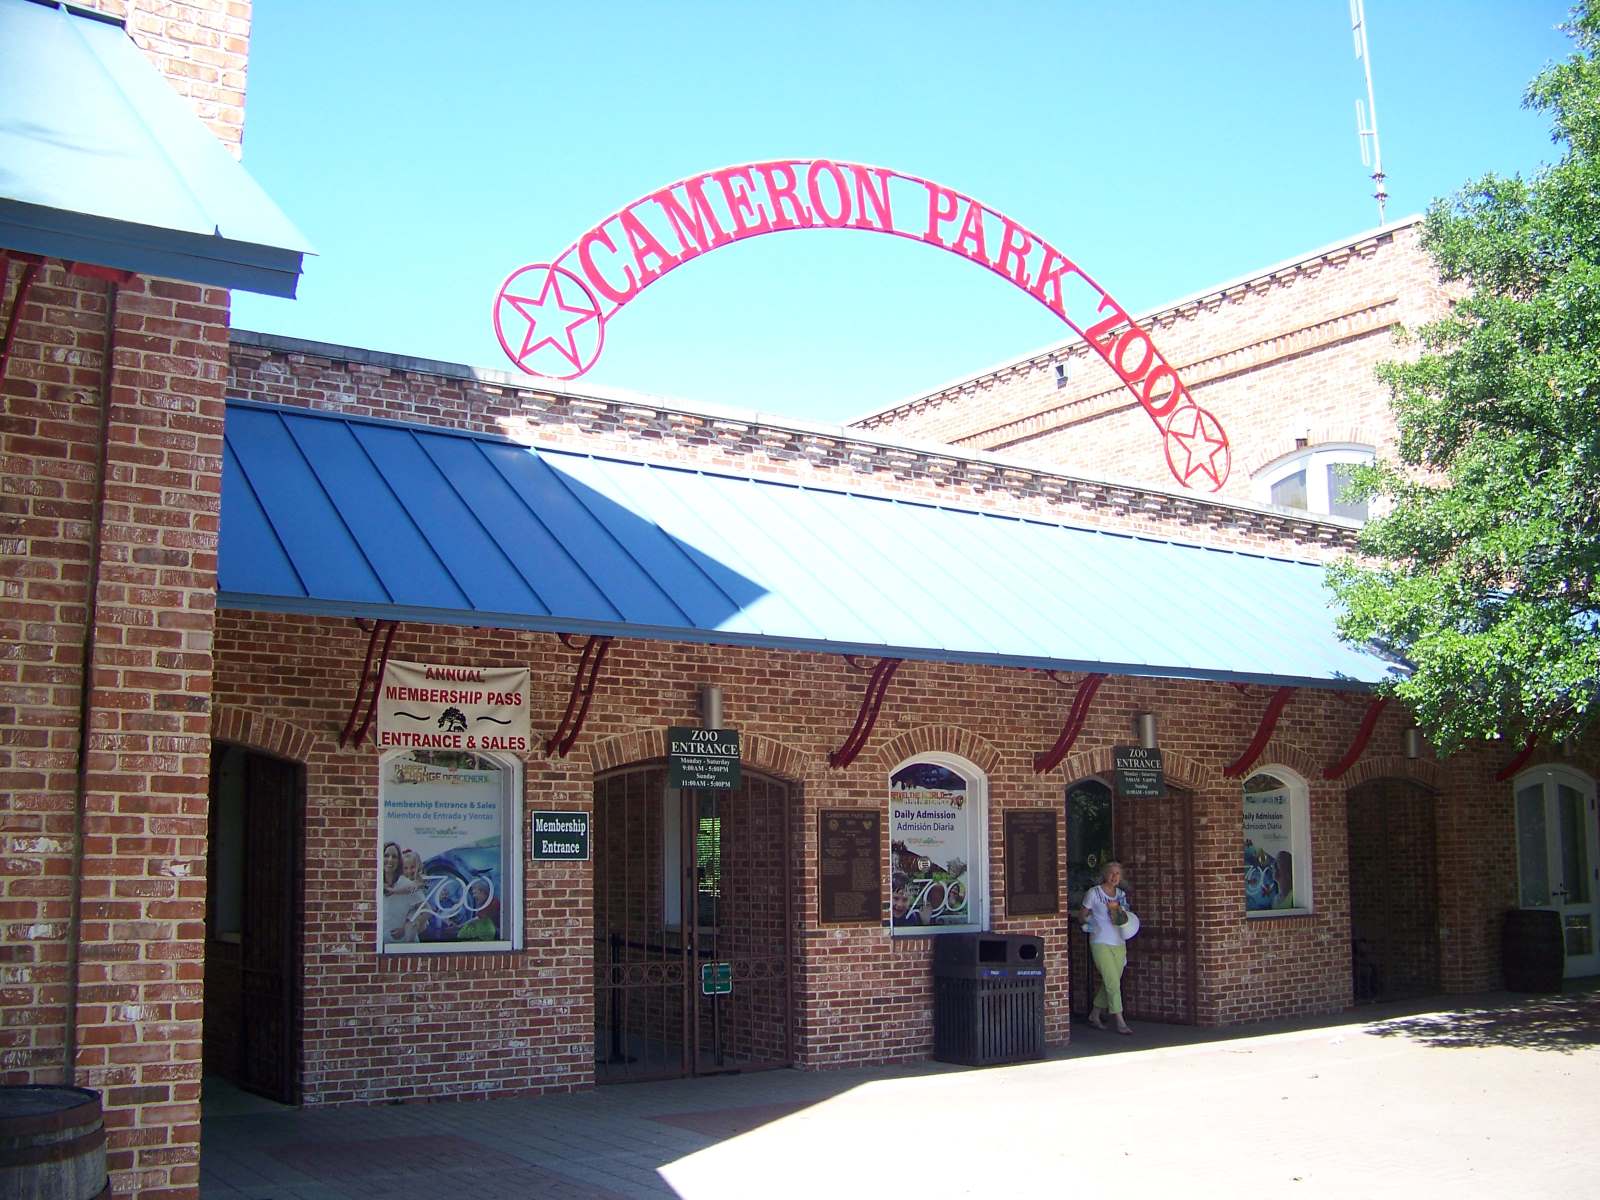 20-unbelievable-facts-about-cameron-park-zoo